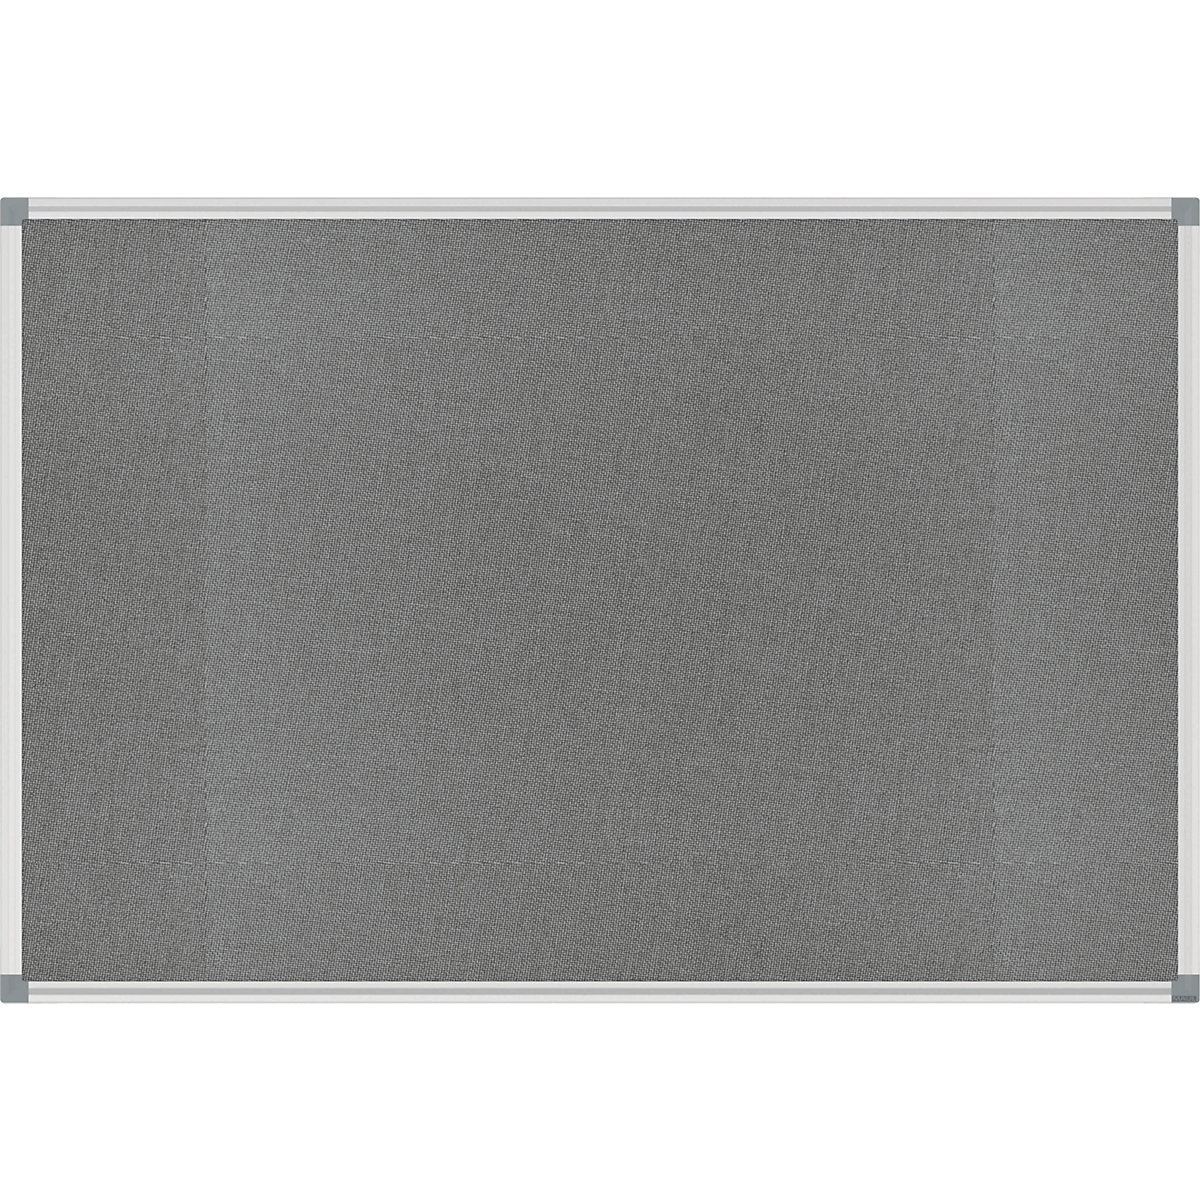 Pinboard STANDARD – MAUL, bekleding van vilt, grijs, b x h = 900 x 600 mm-2